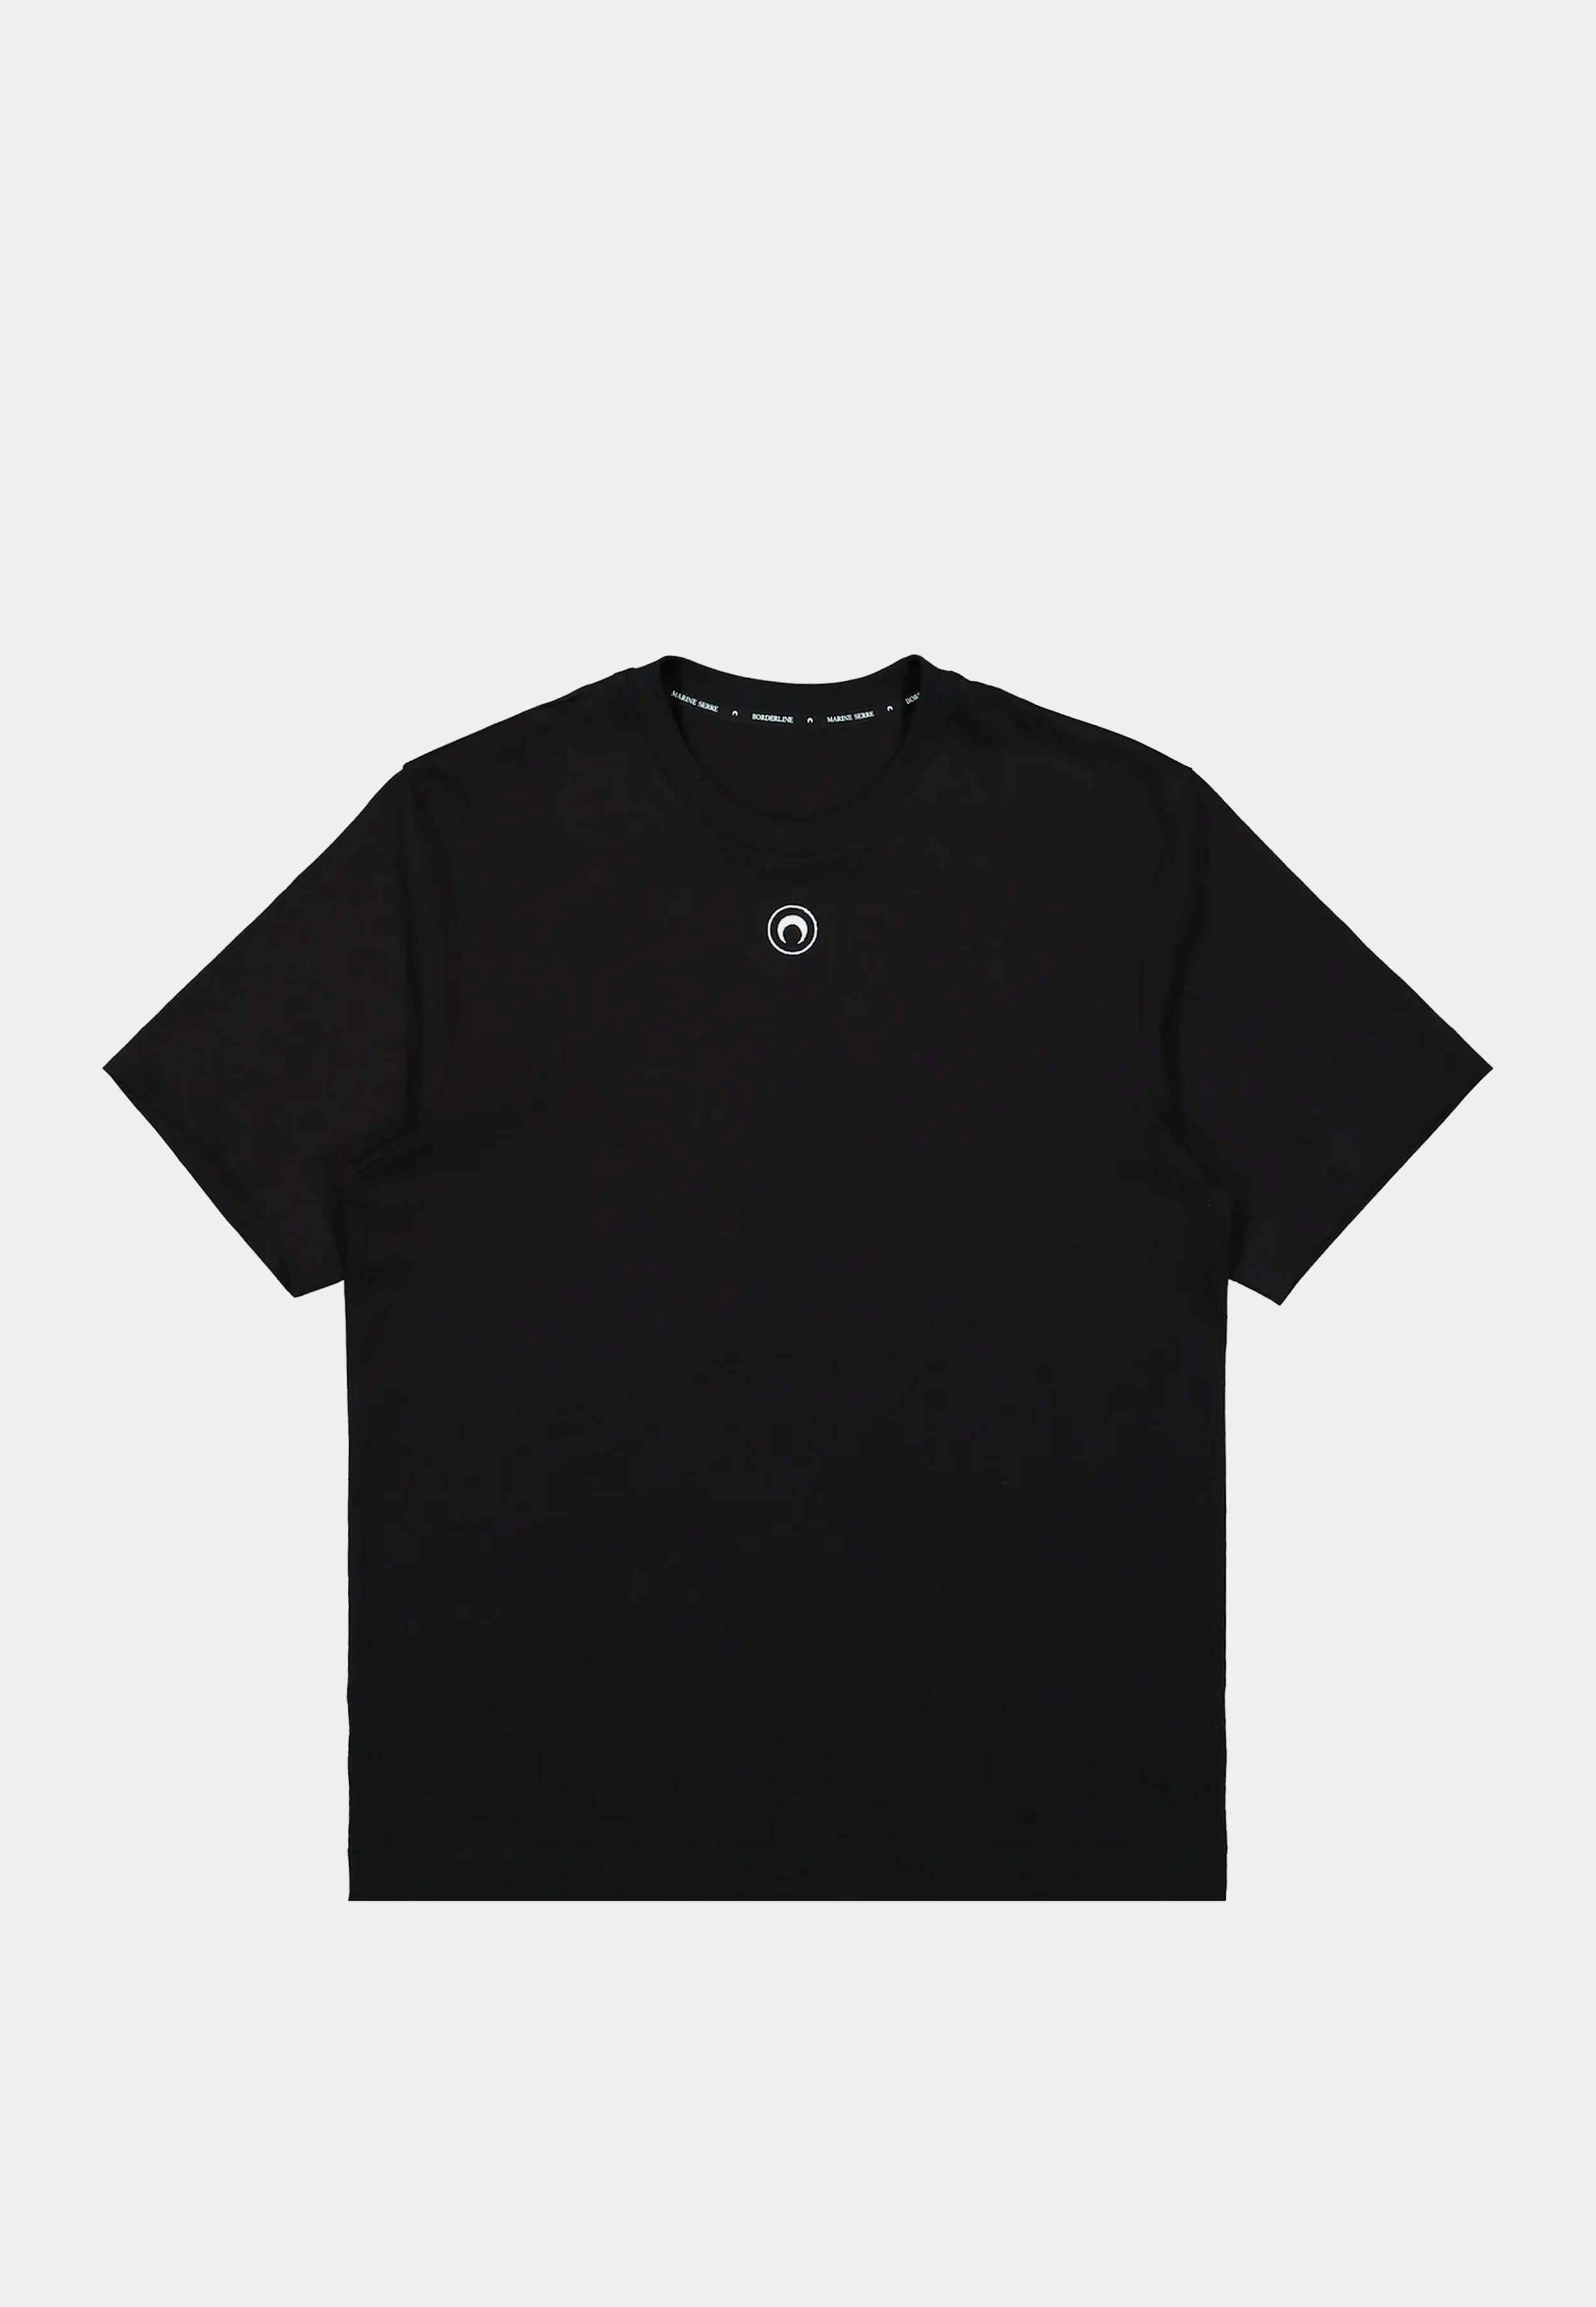 Marine Serre Organic Cotton Jersey Plain T-Shirt 1454-Bk99 Black